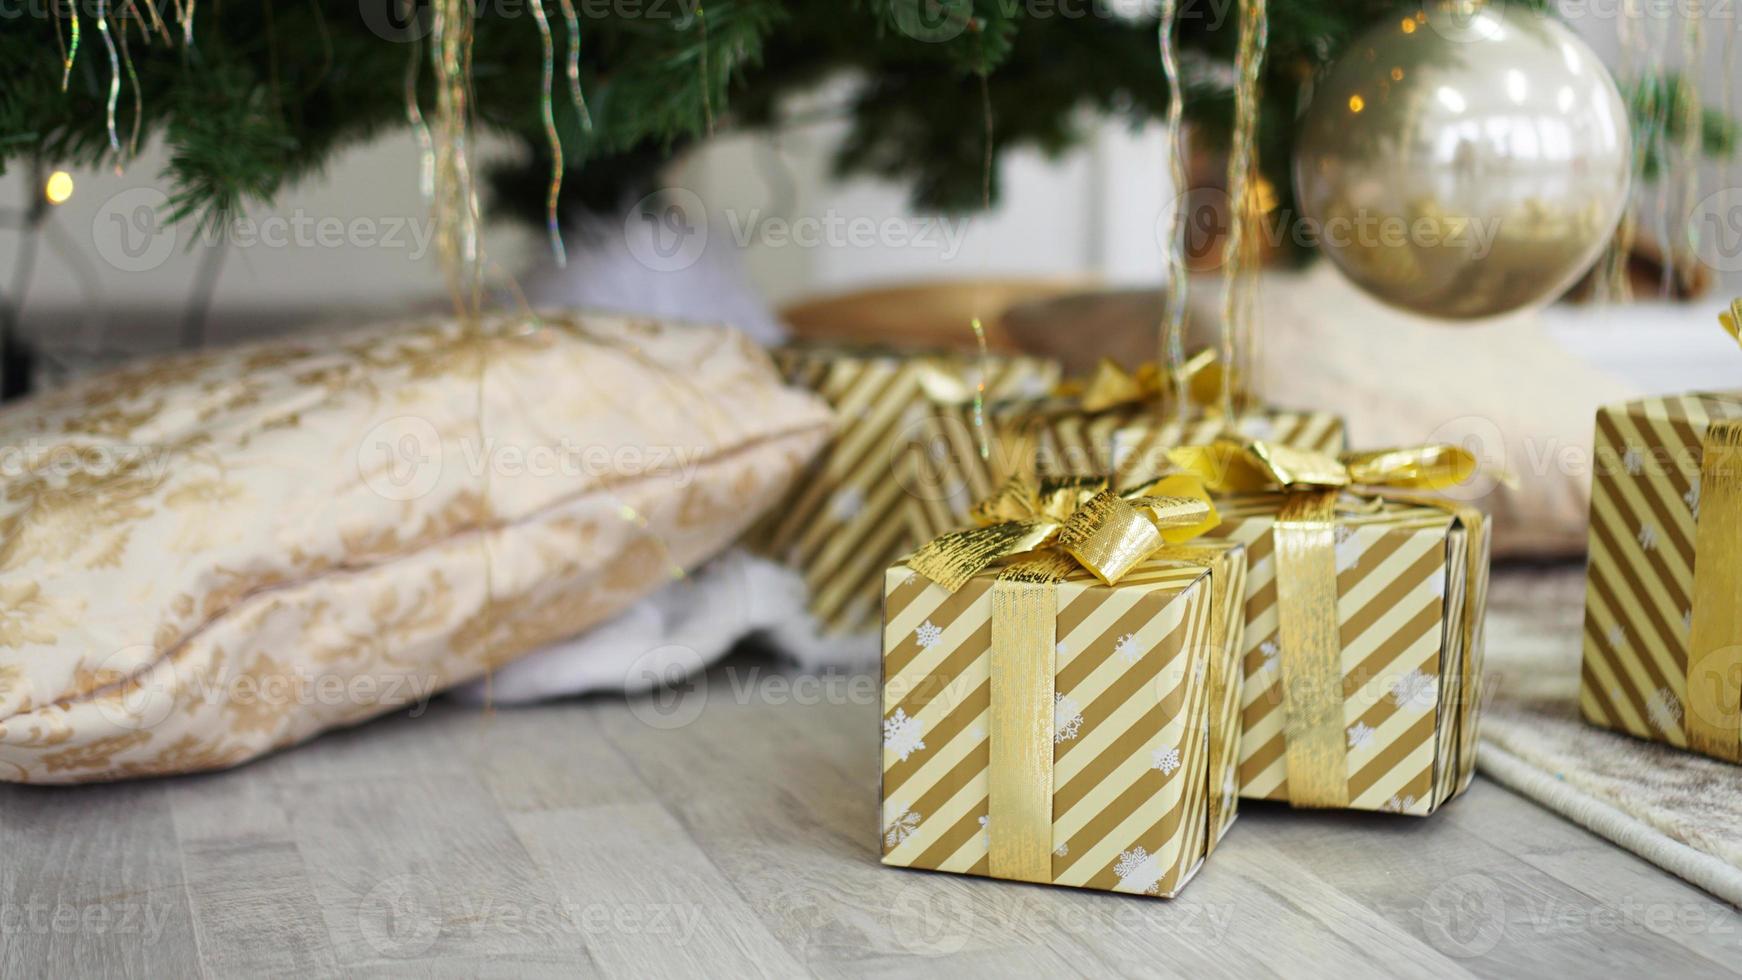 caixas de presentes debaixo da árvore de natal foto